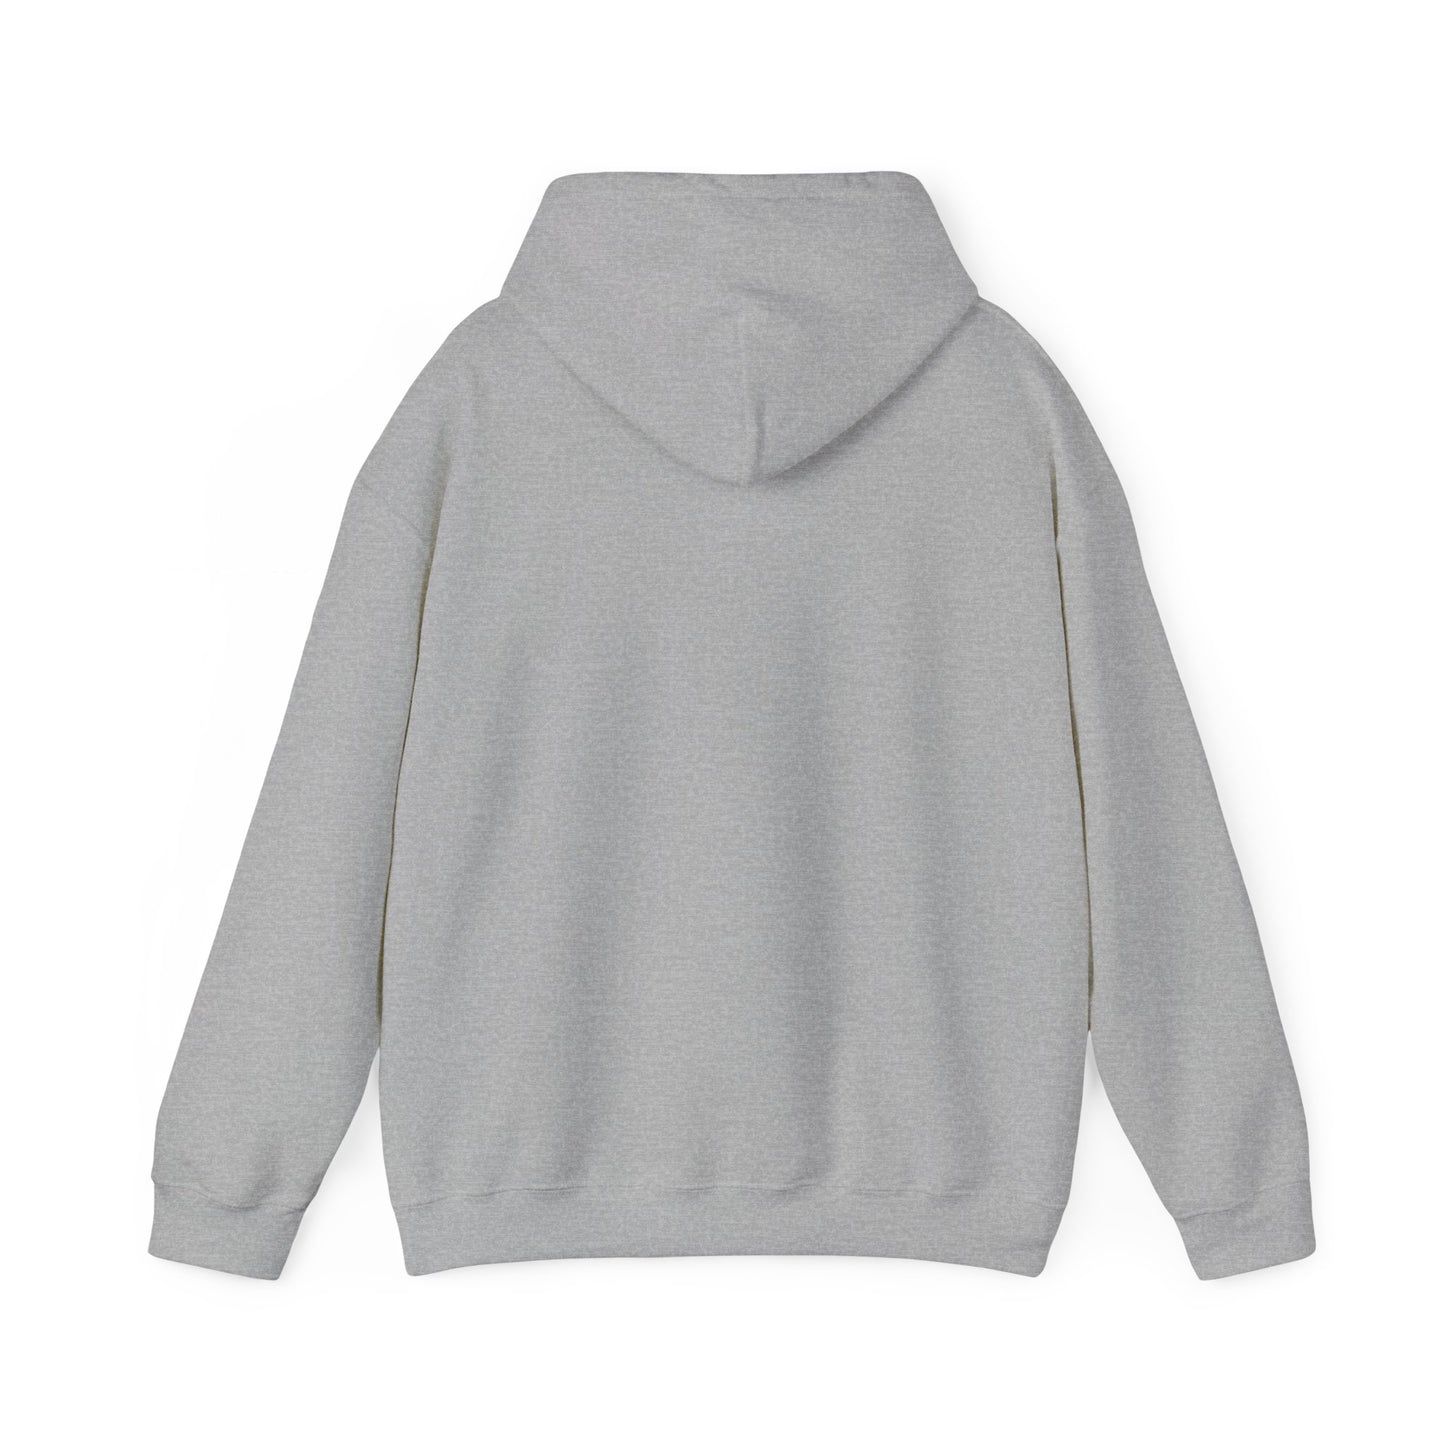 Self-Empowerment Heavy Blend Hooded Sweatshirt (Unisex)